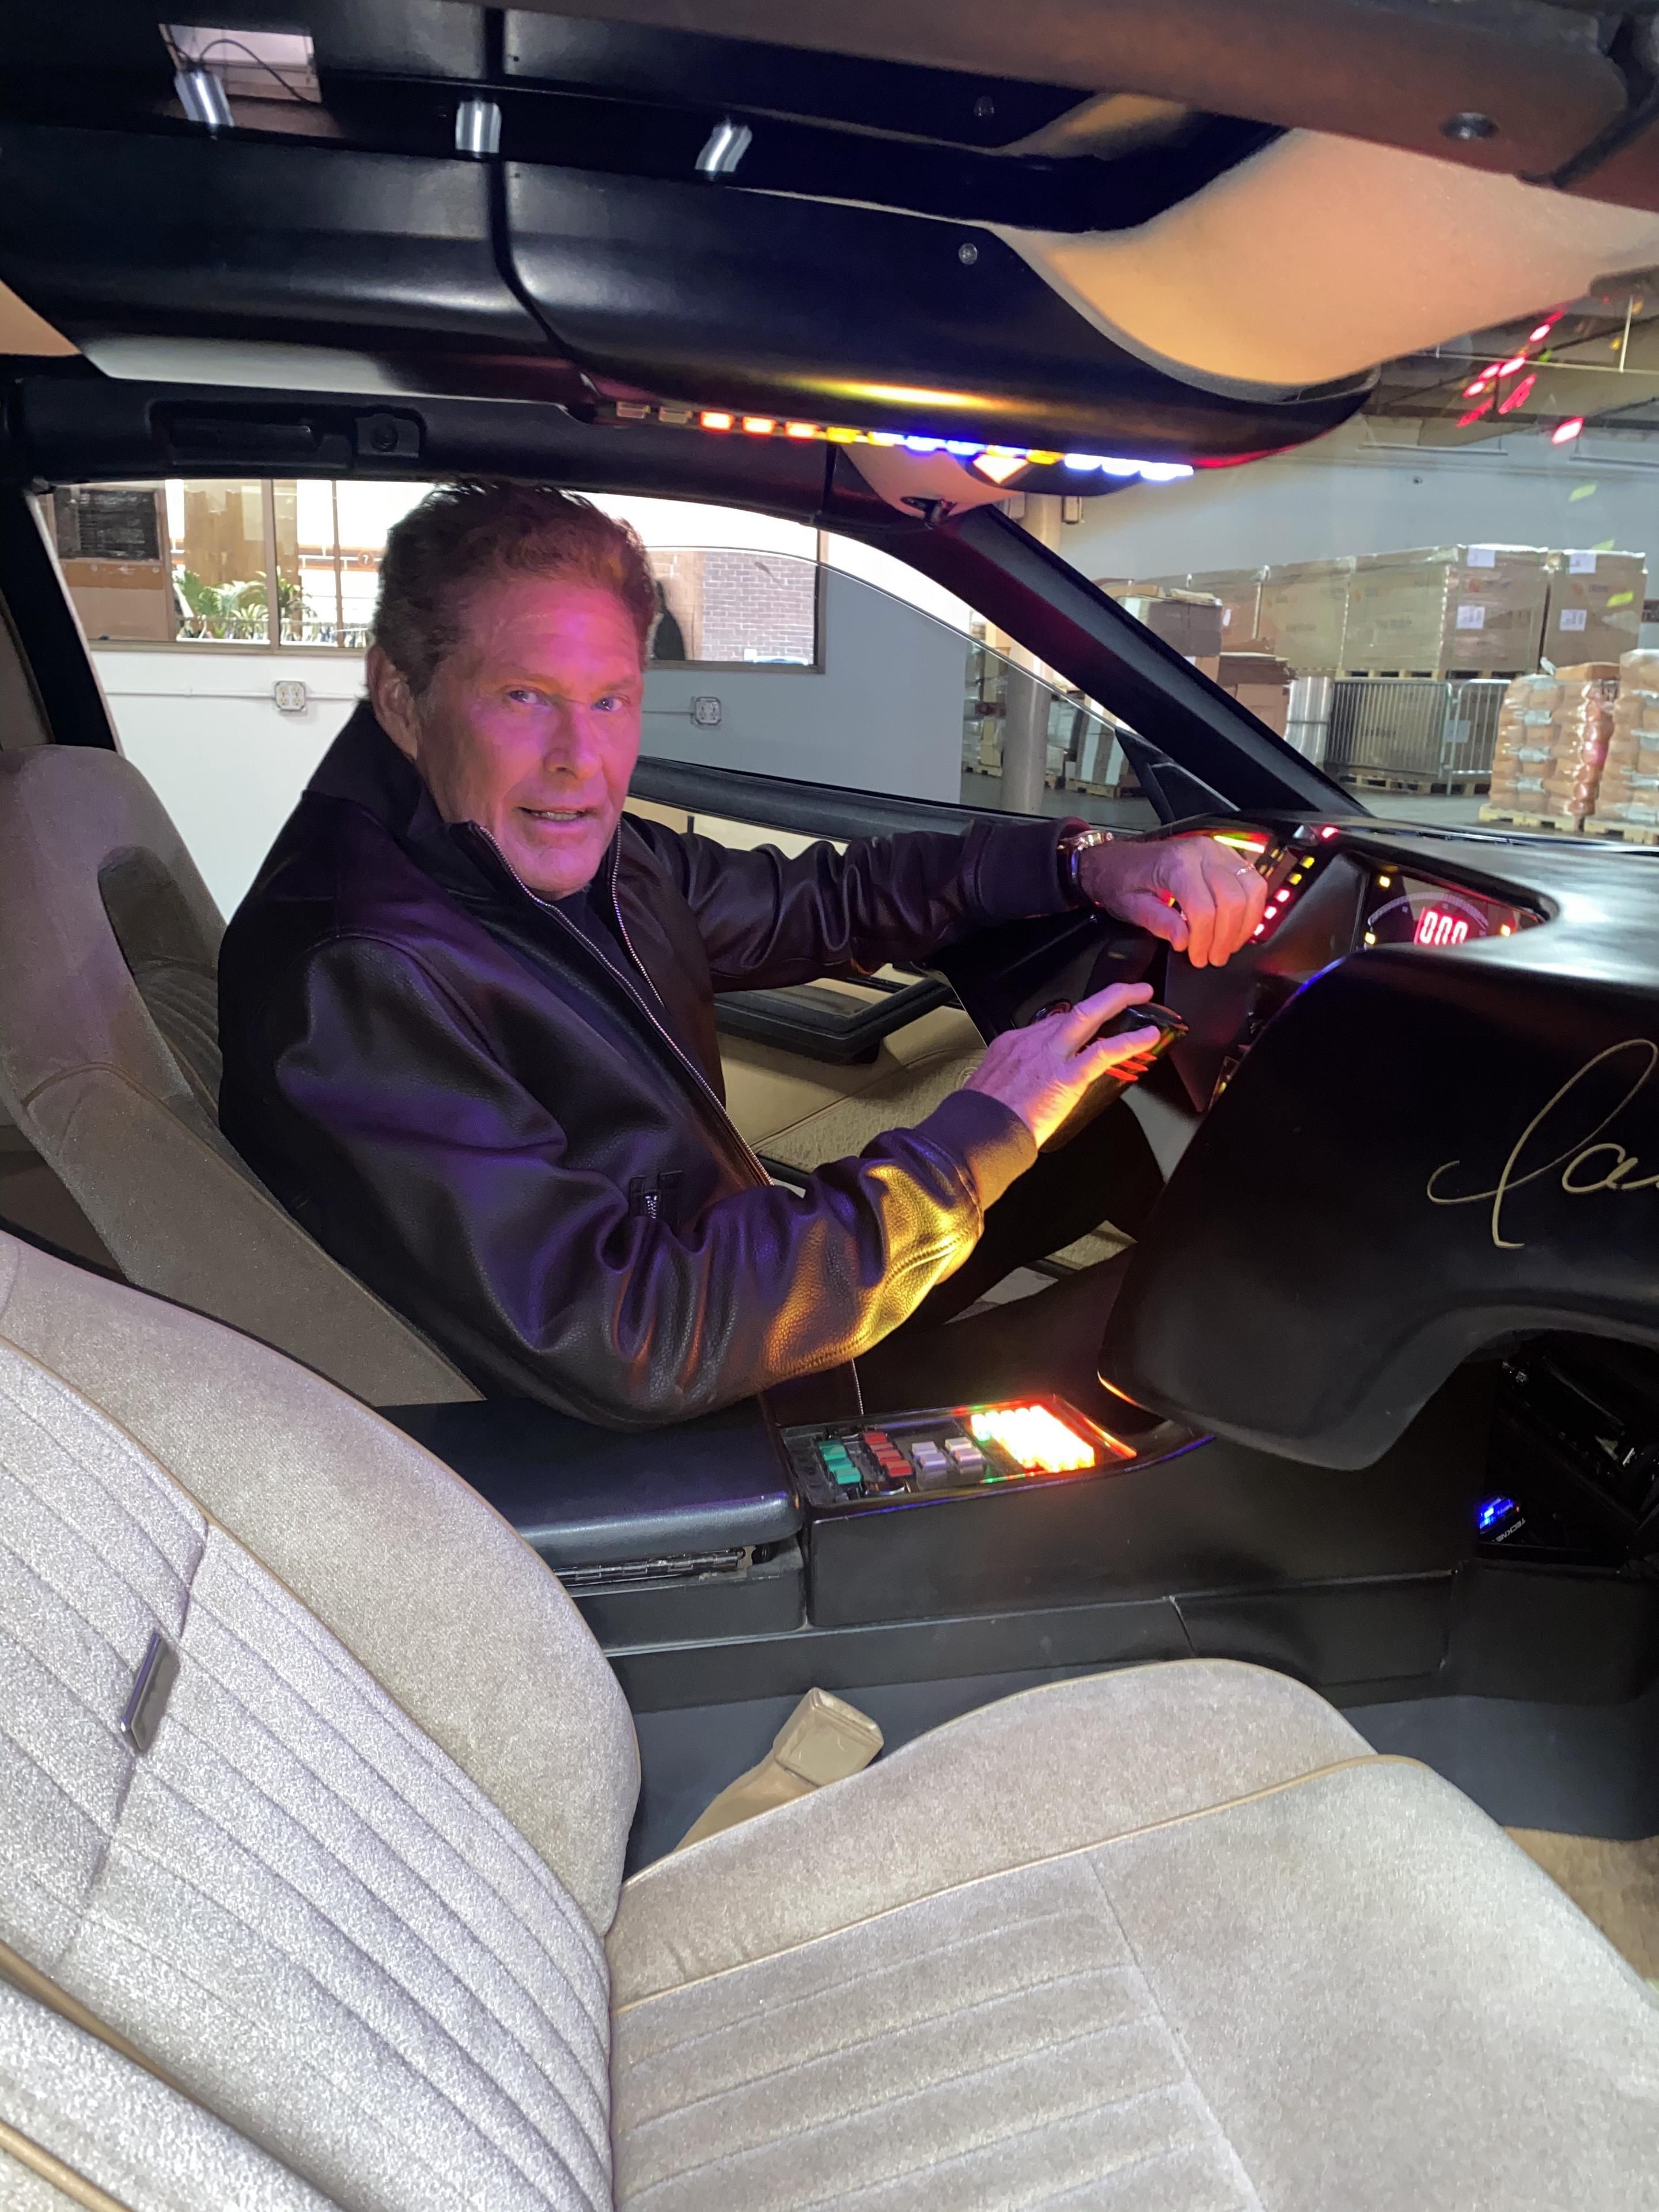 Knight Rider KITT replica car bought by Jackson Township Ohio resident